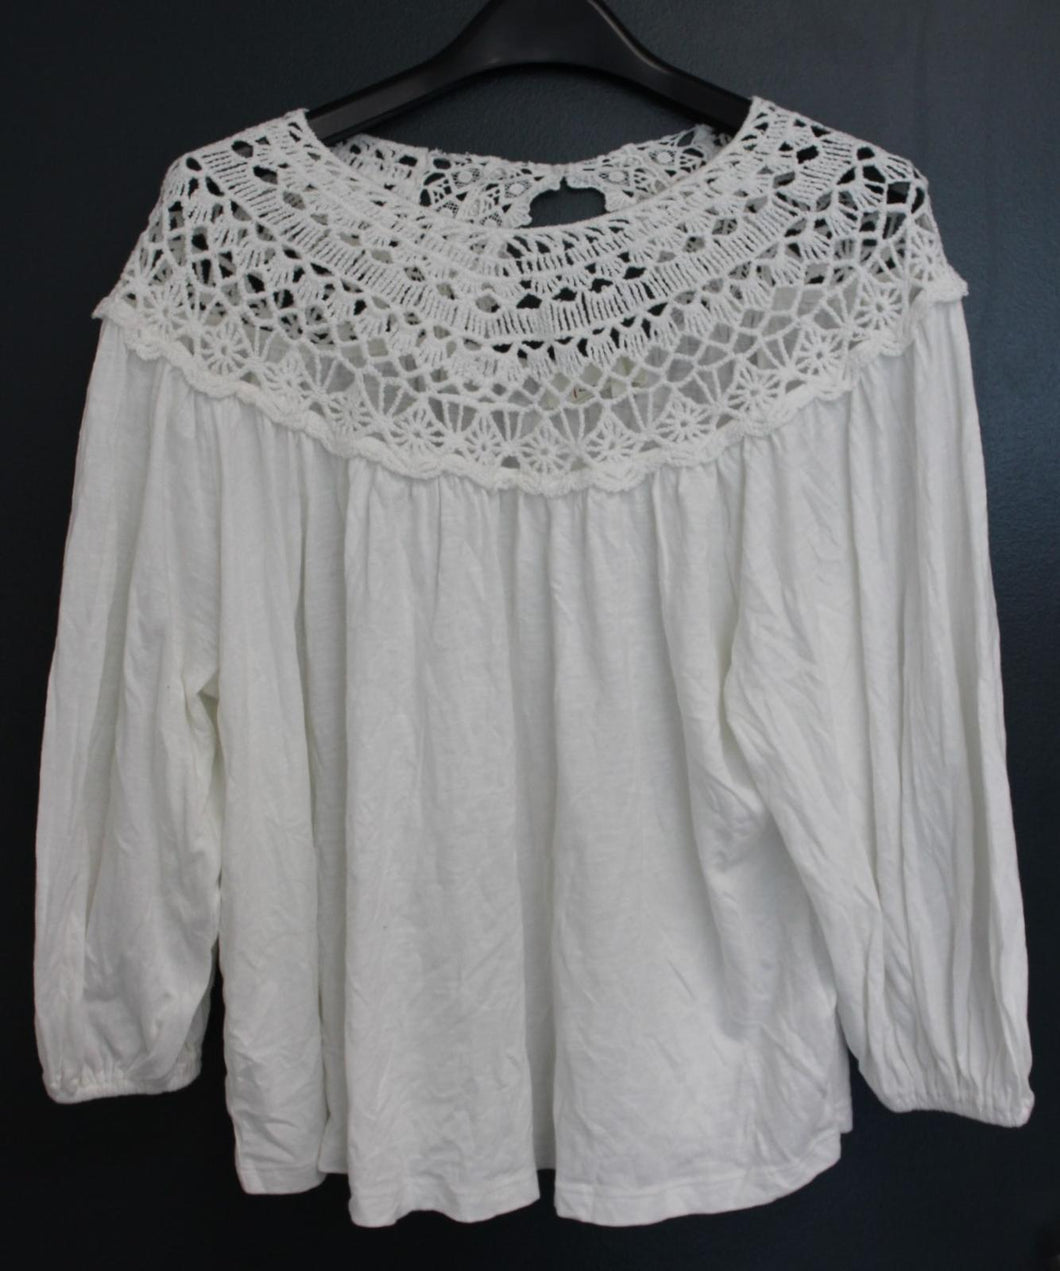 ANTHROPOLOGIE Ladies White Cotton Blend Lace Neck Blouse Top Size XL NEW